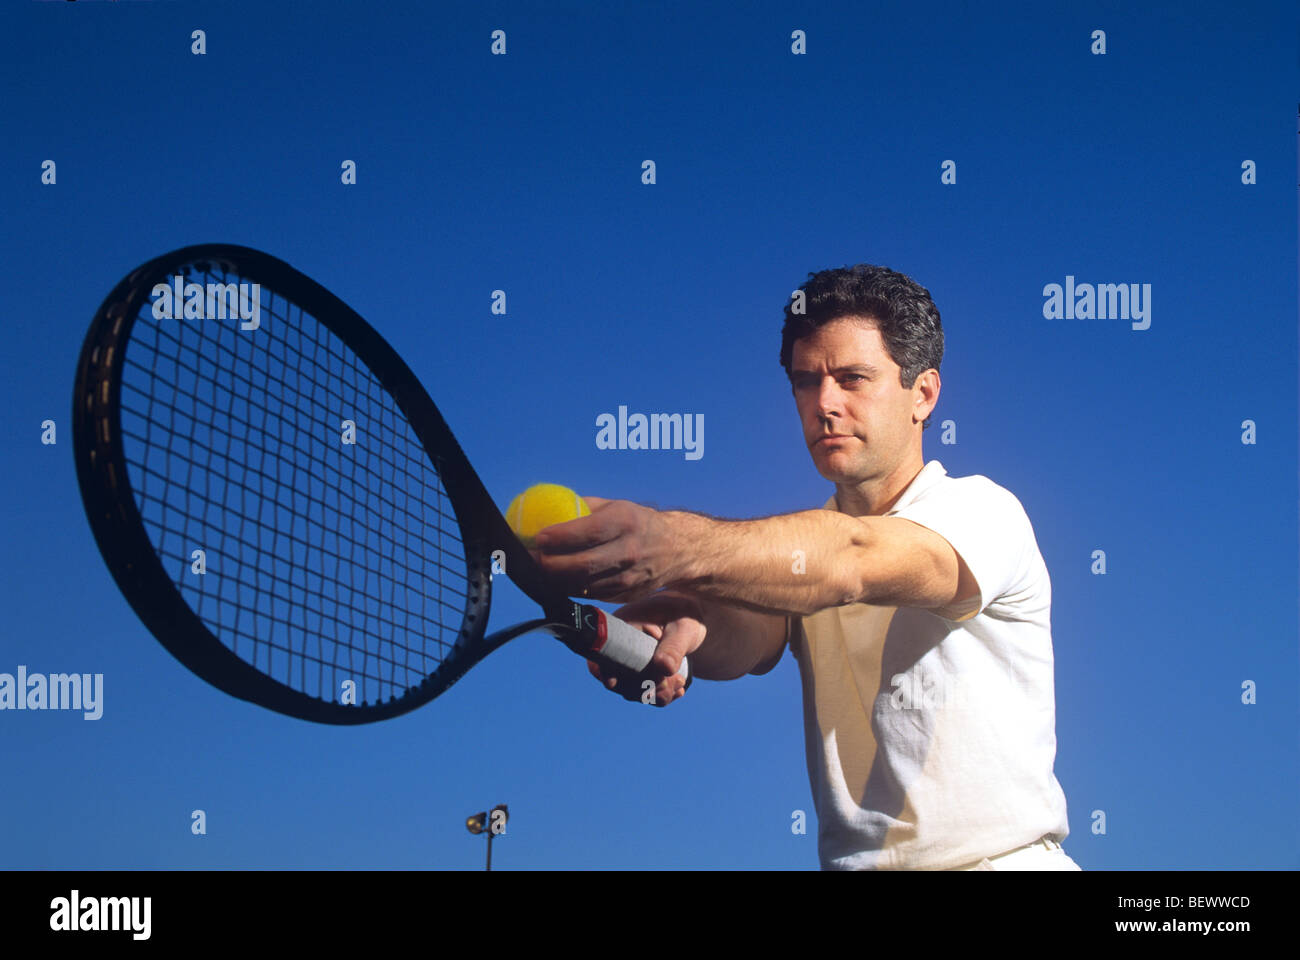 Tennis Player Preparing to Serve Stock Photo